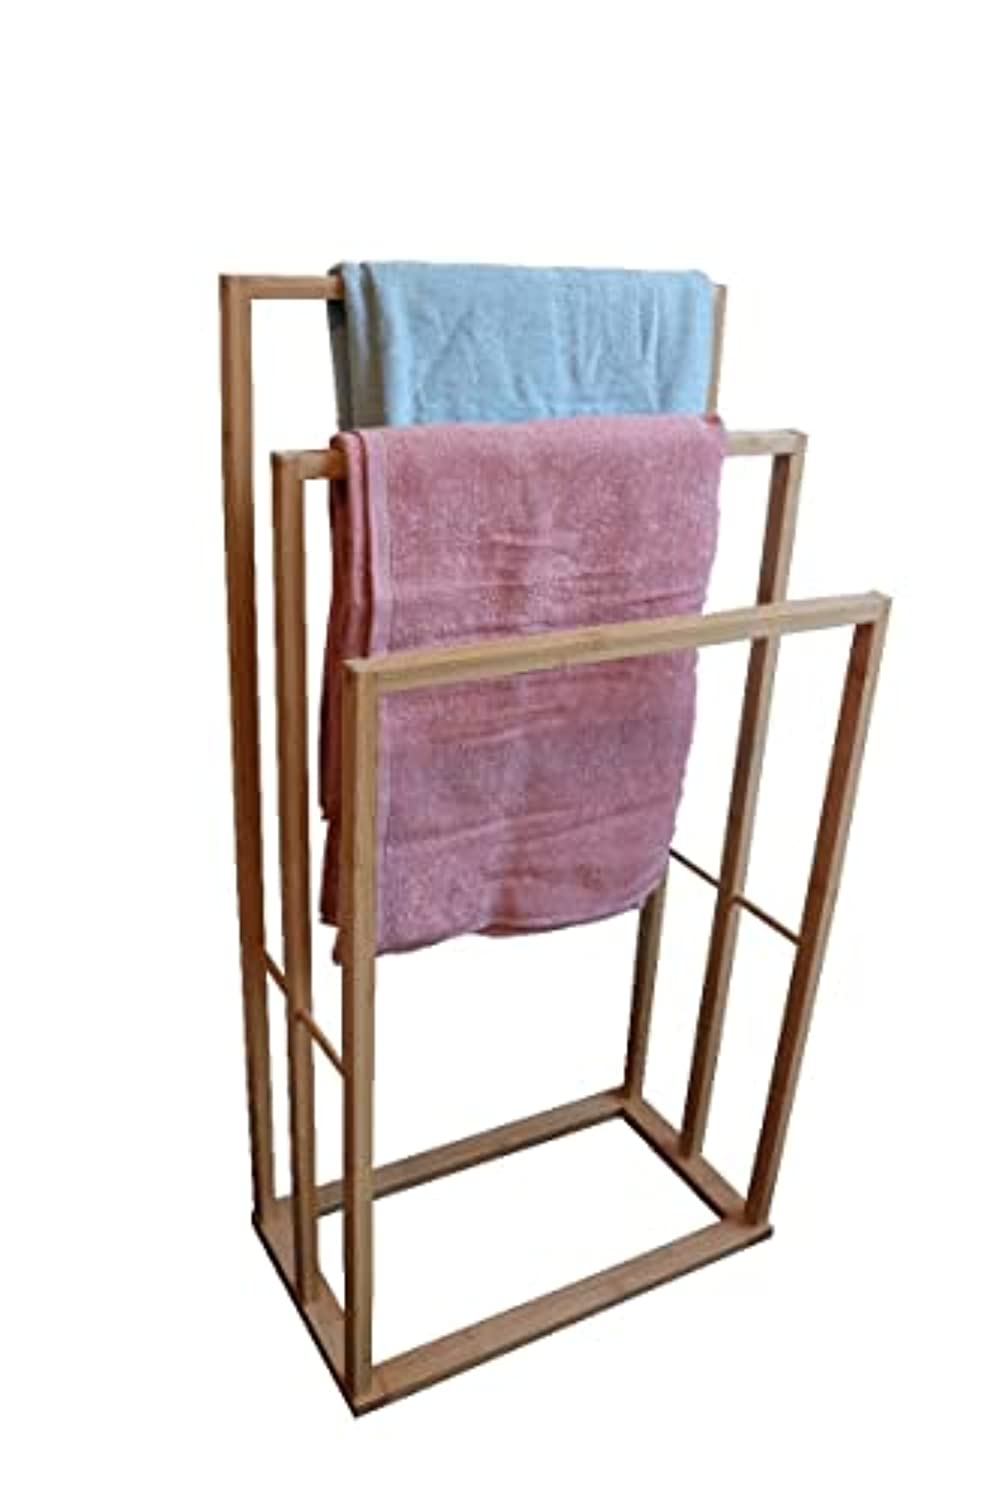 Bamboo Towel Bar Holder Rack 3-Tier Freestanding for Bathroom Towel Racks